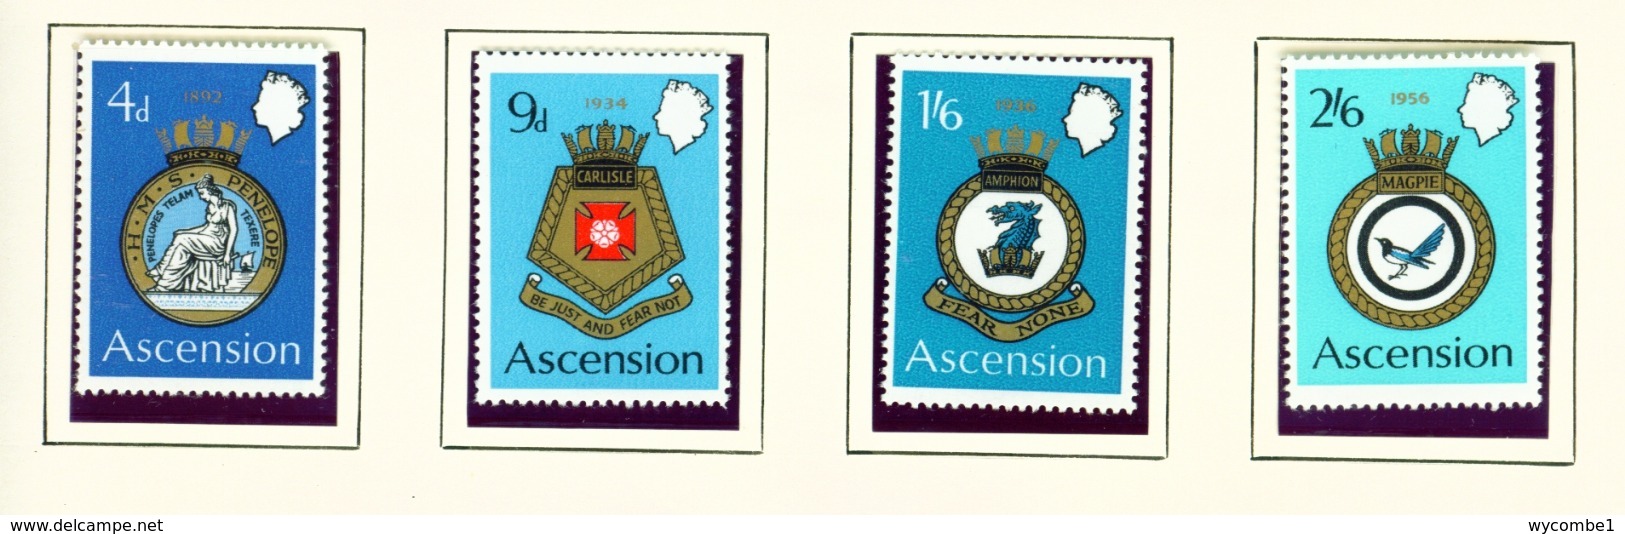 ASCENSION  -  1970 Naval Crests Set Unmounted/Never Hinged Mint - Ascension